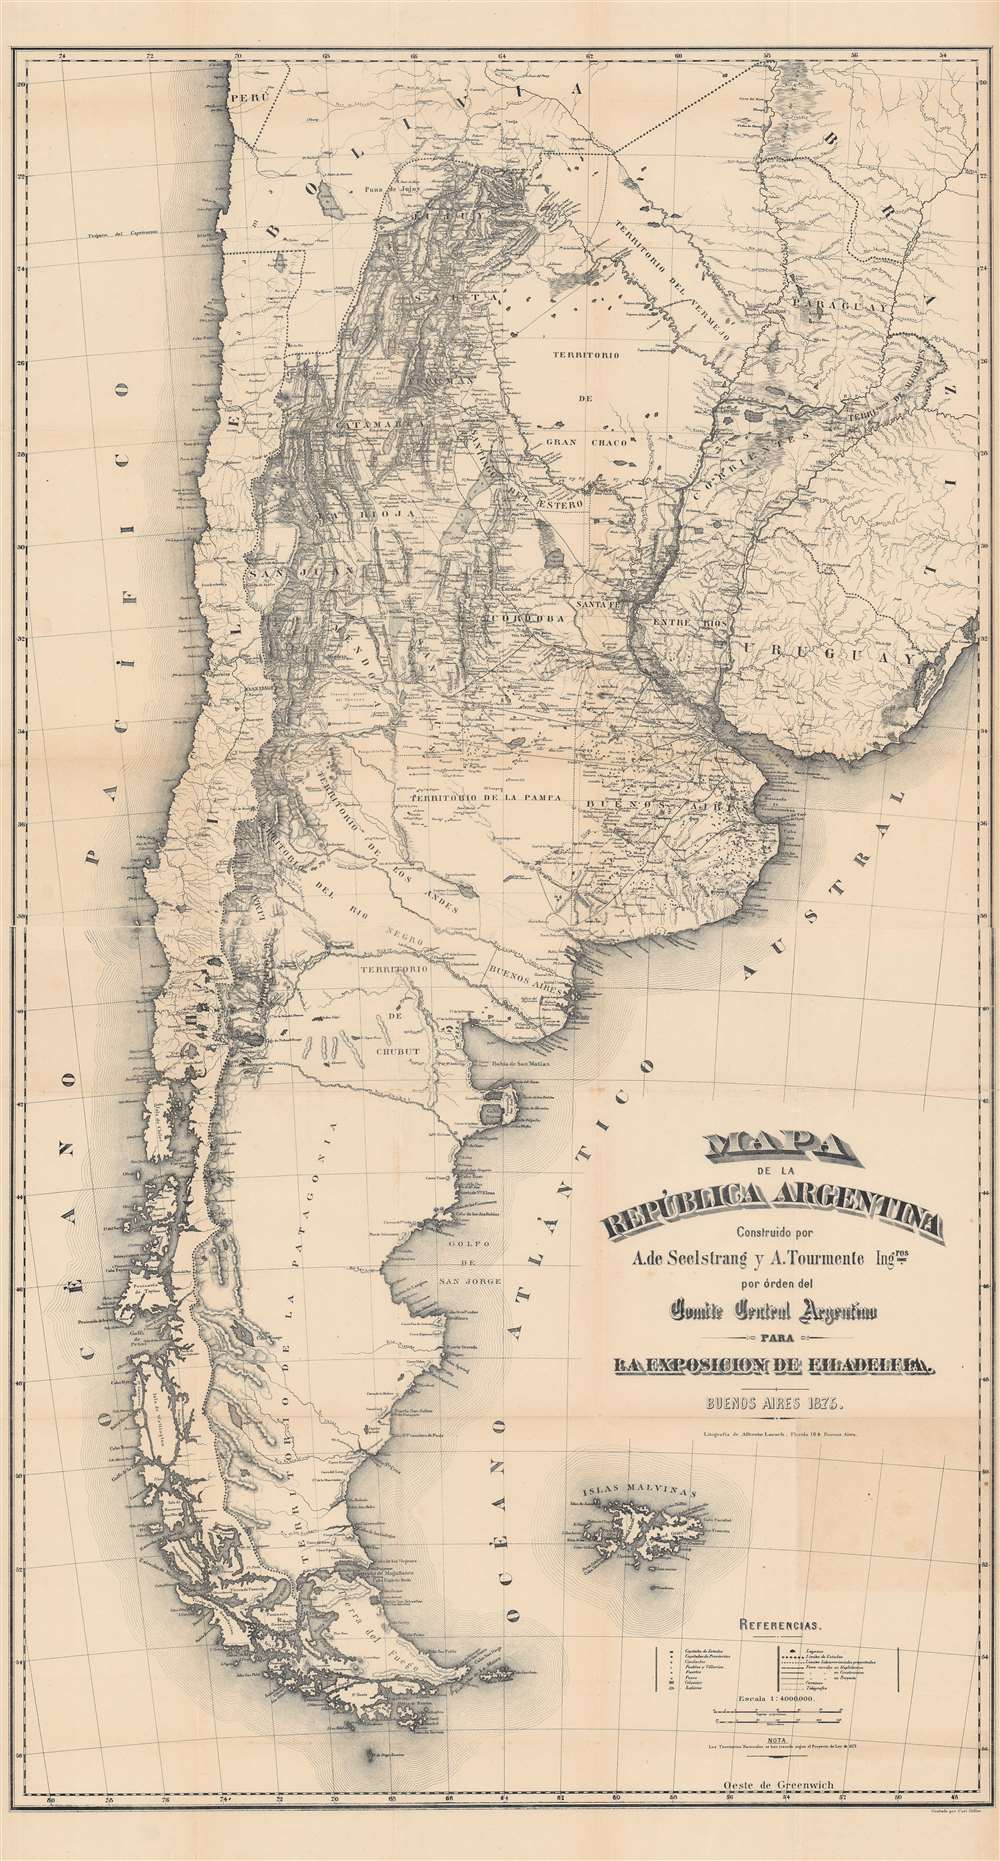 1876 Seelstrang / Tourmente Map of Argentina